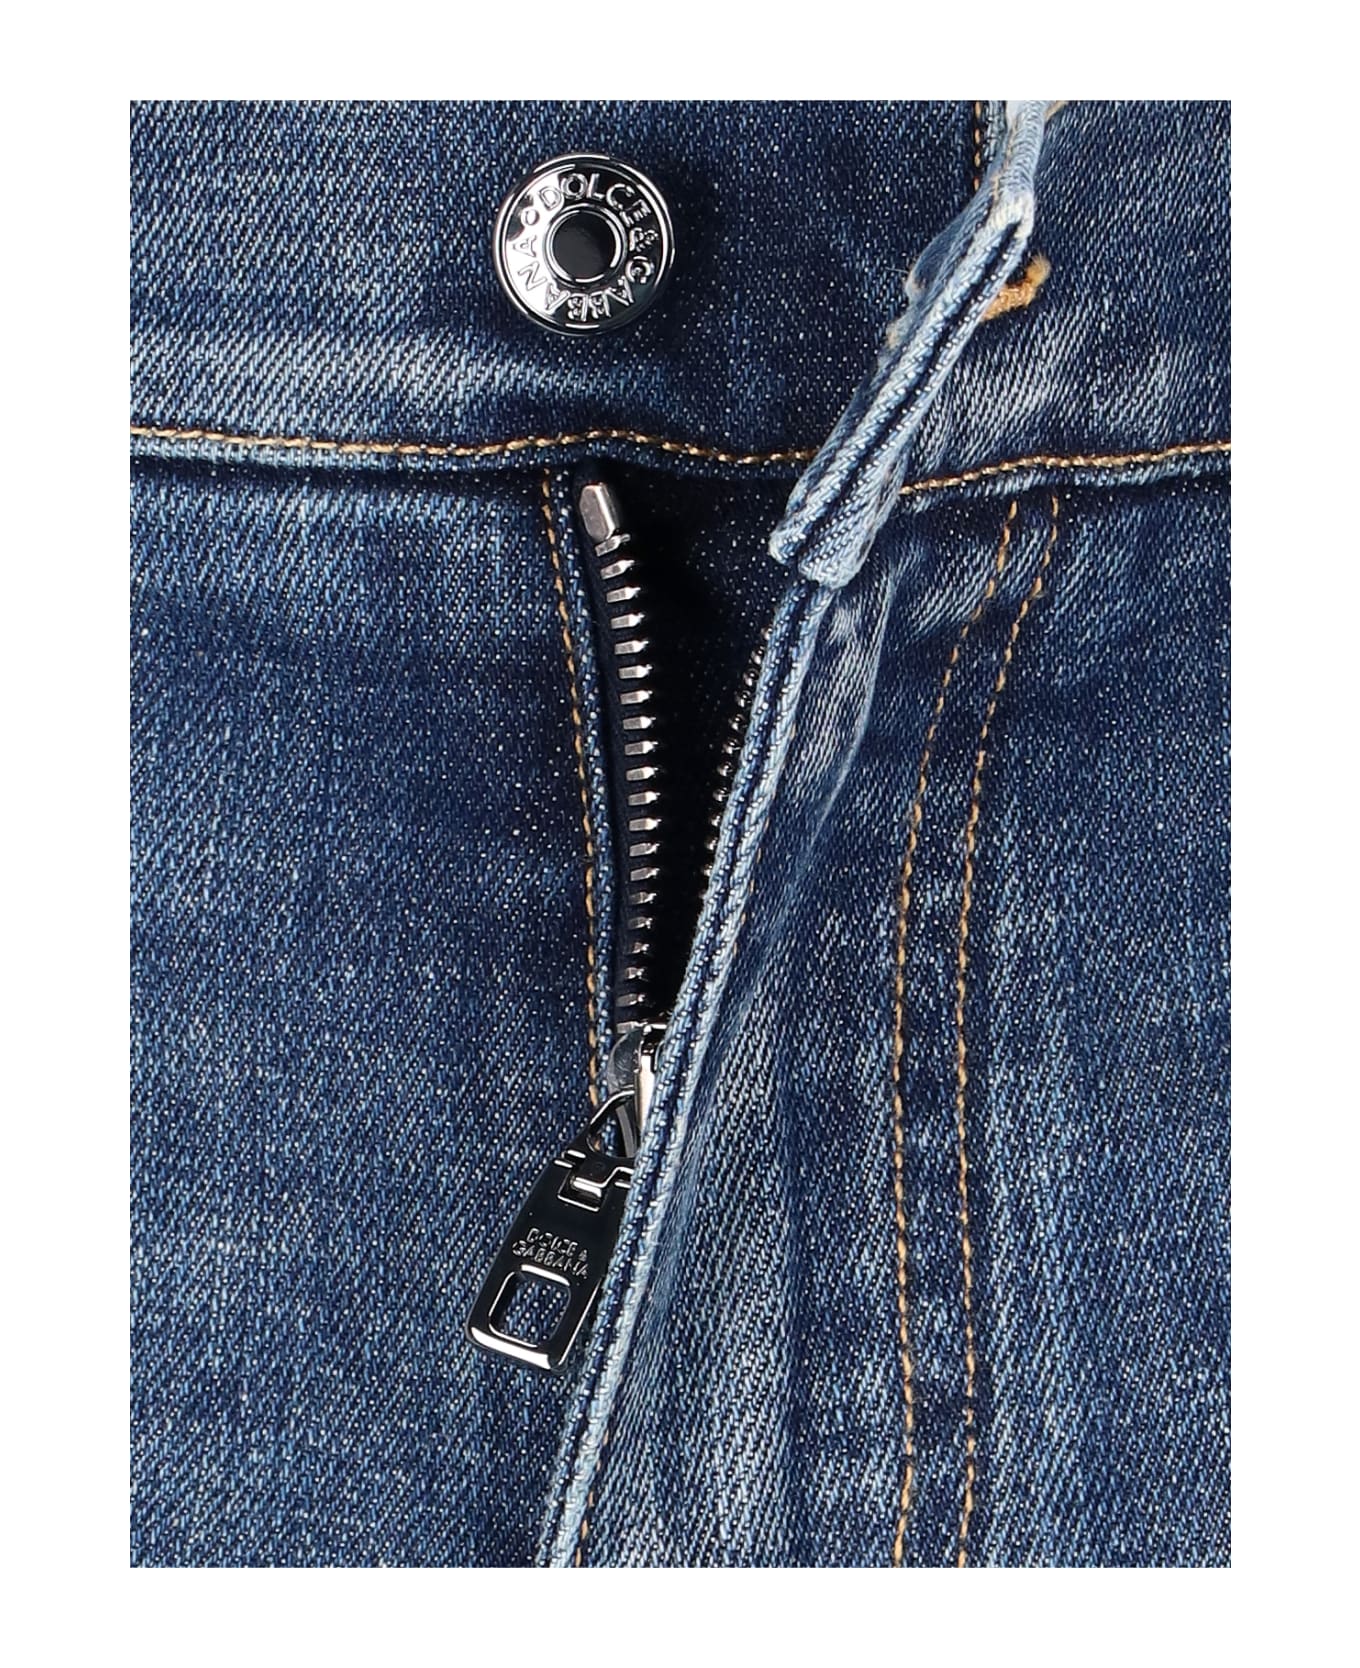 Dolce & Gabbana Straight Jeans Usured Details - Blue デニム